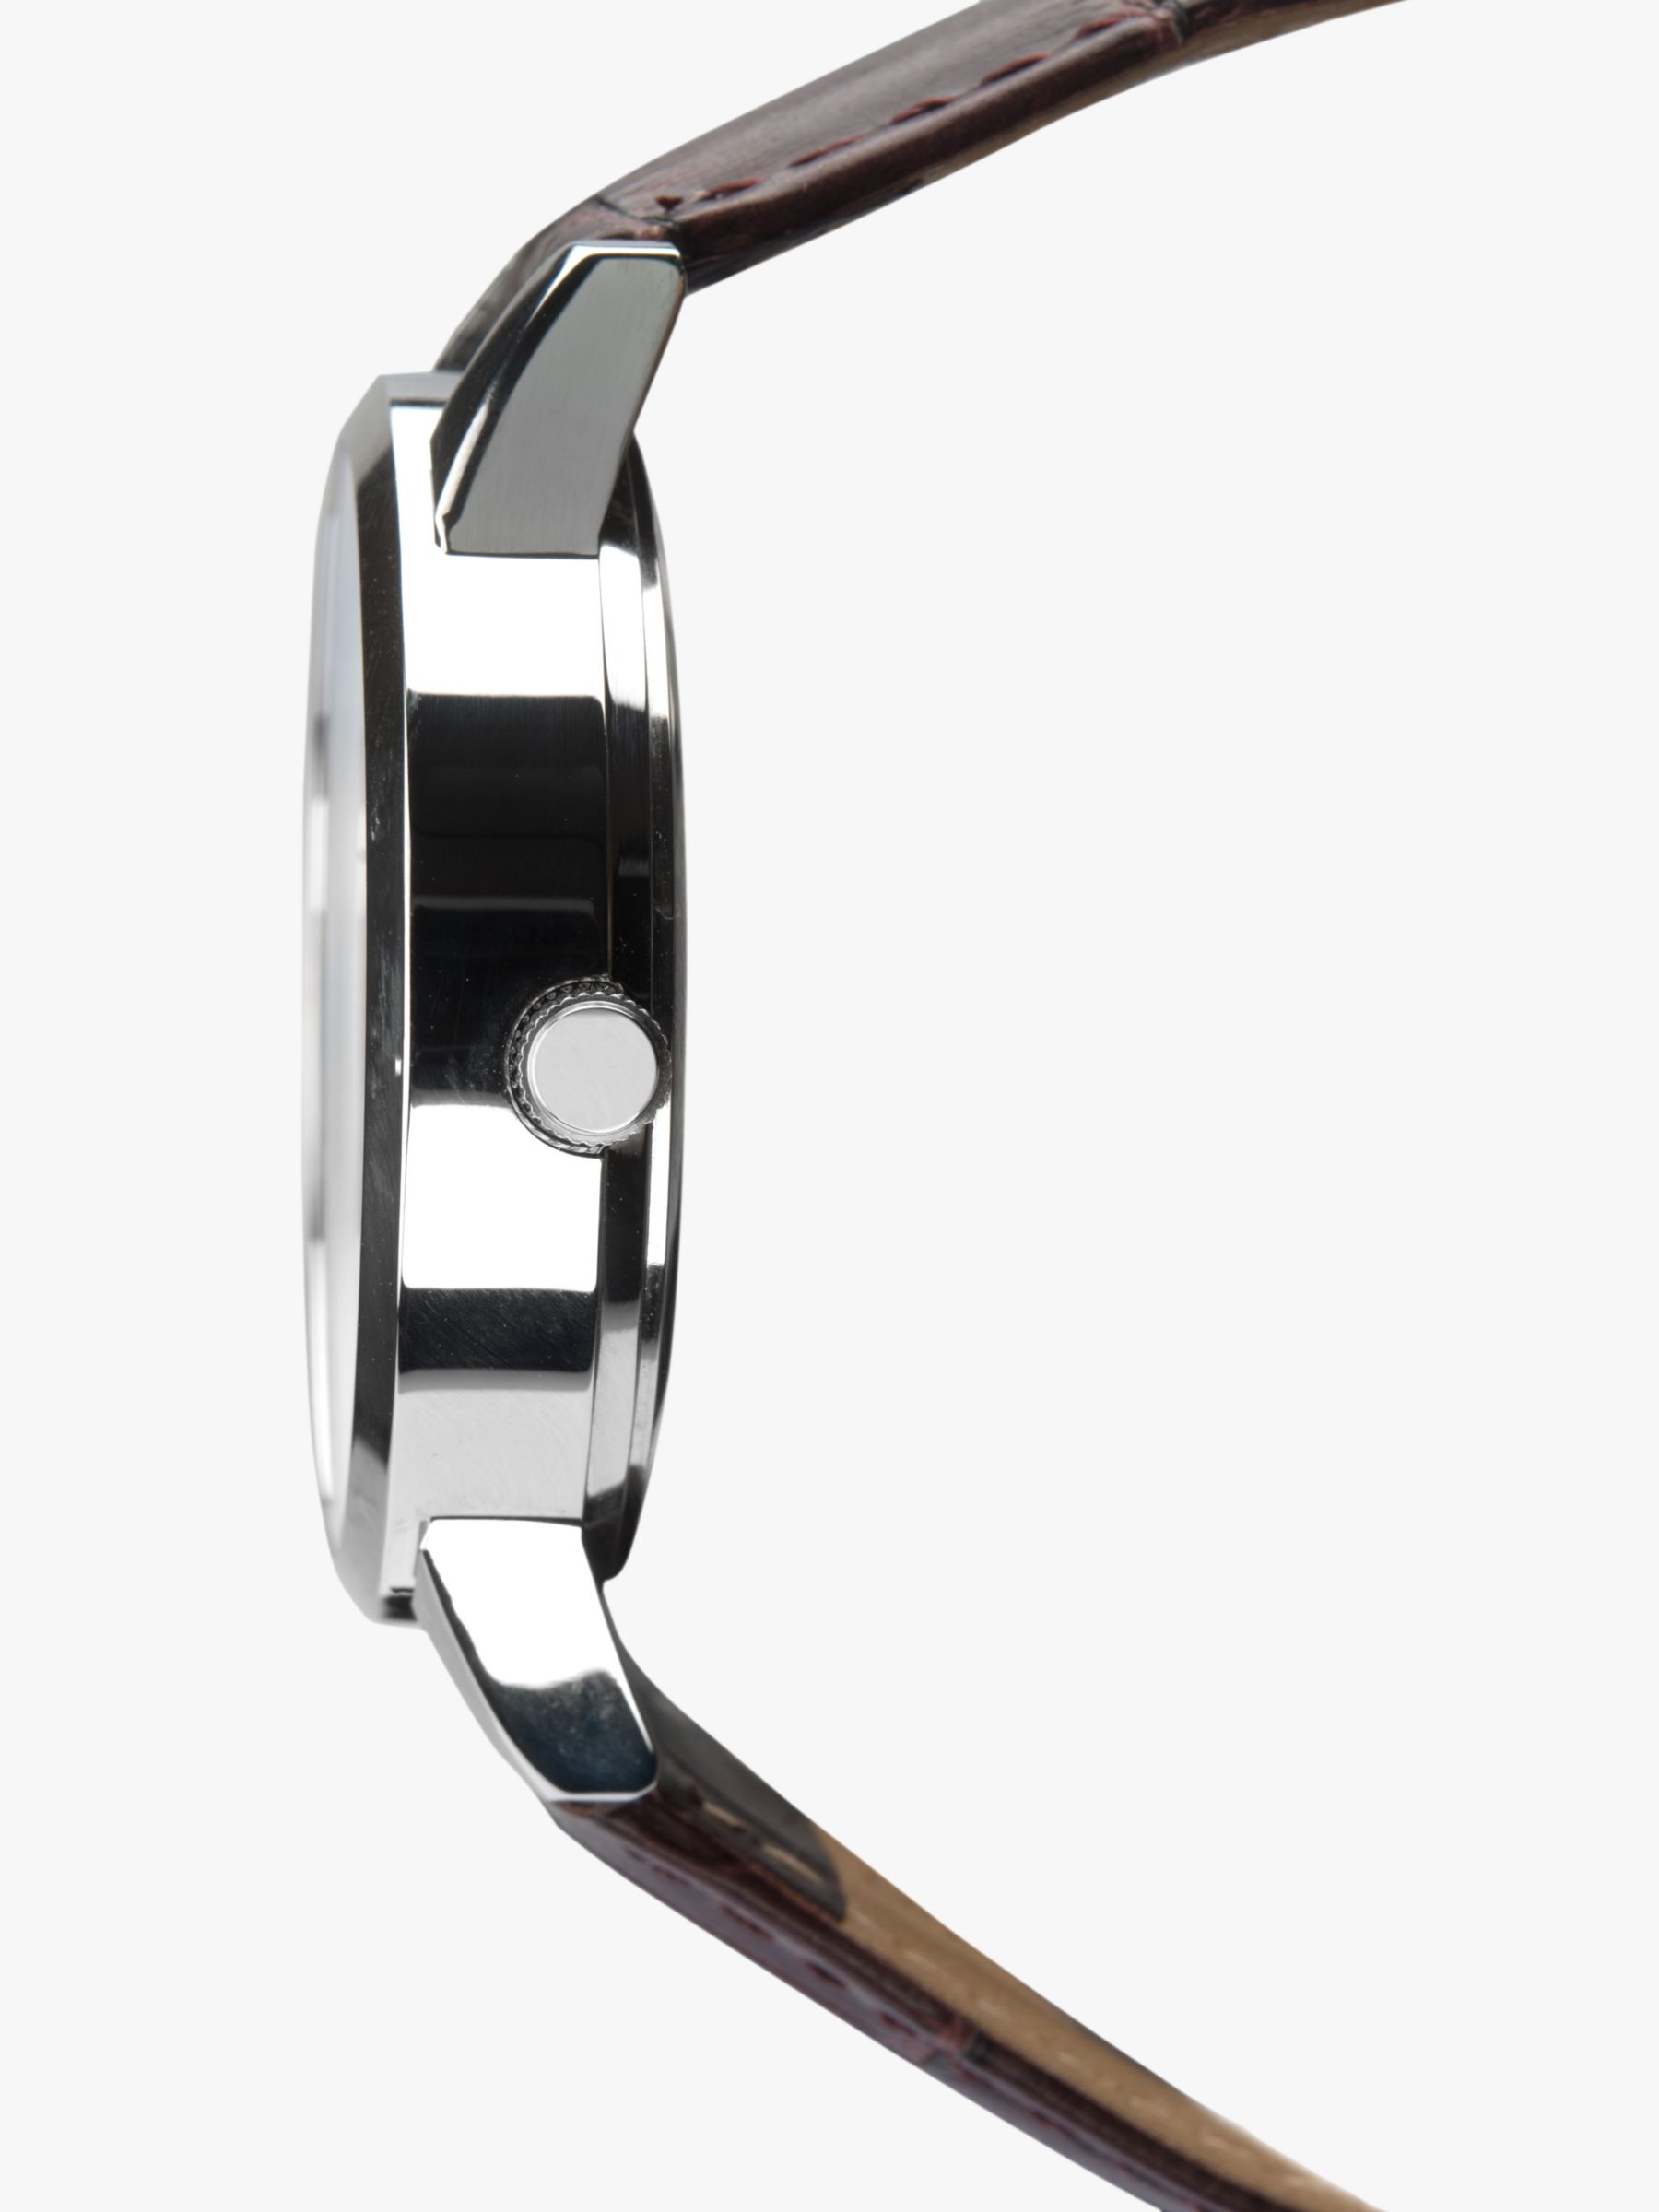 Buy Sekonda Men's Day Date Leather Strap Watch Online at johnlewis.com